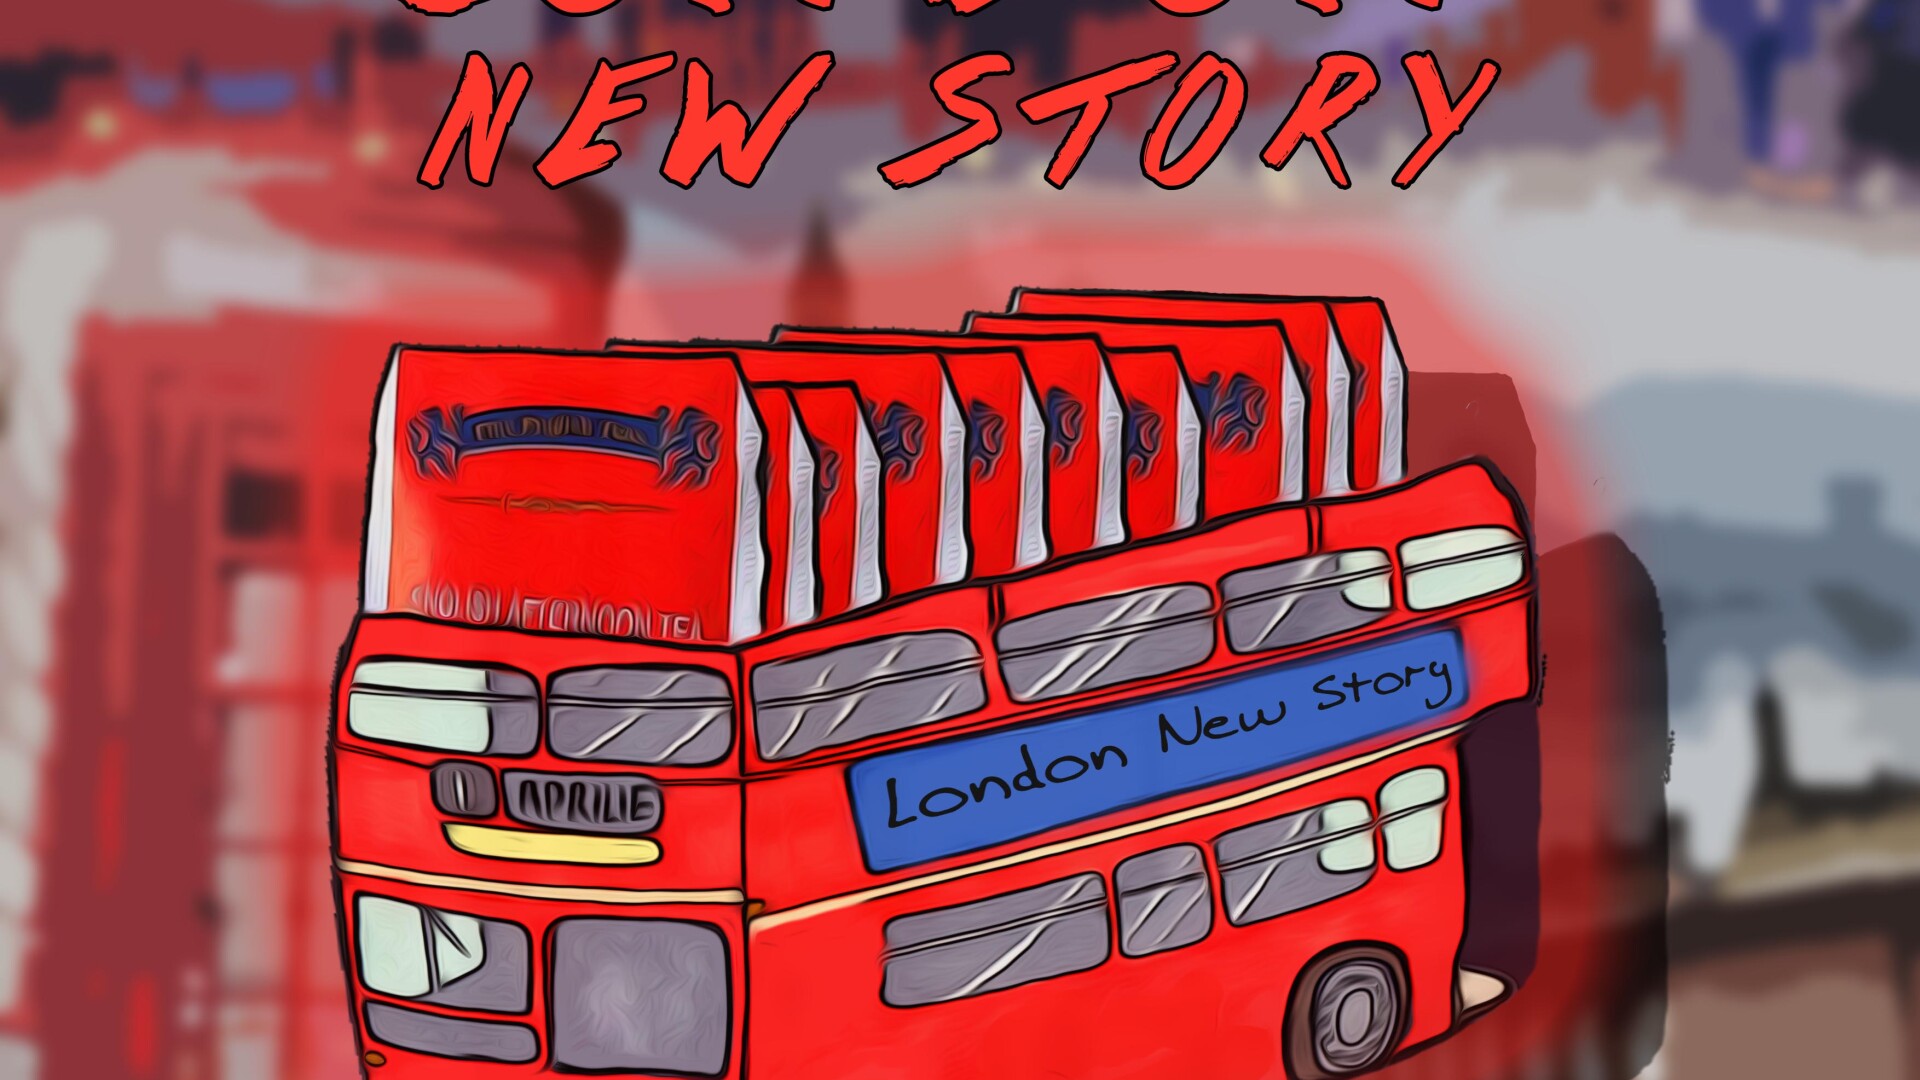 London -New story